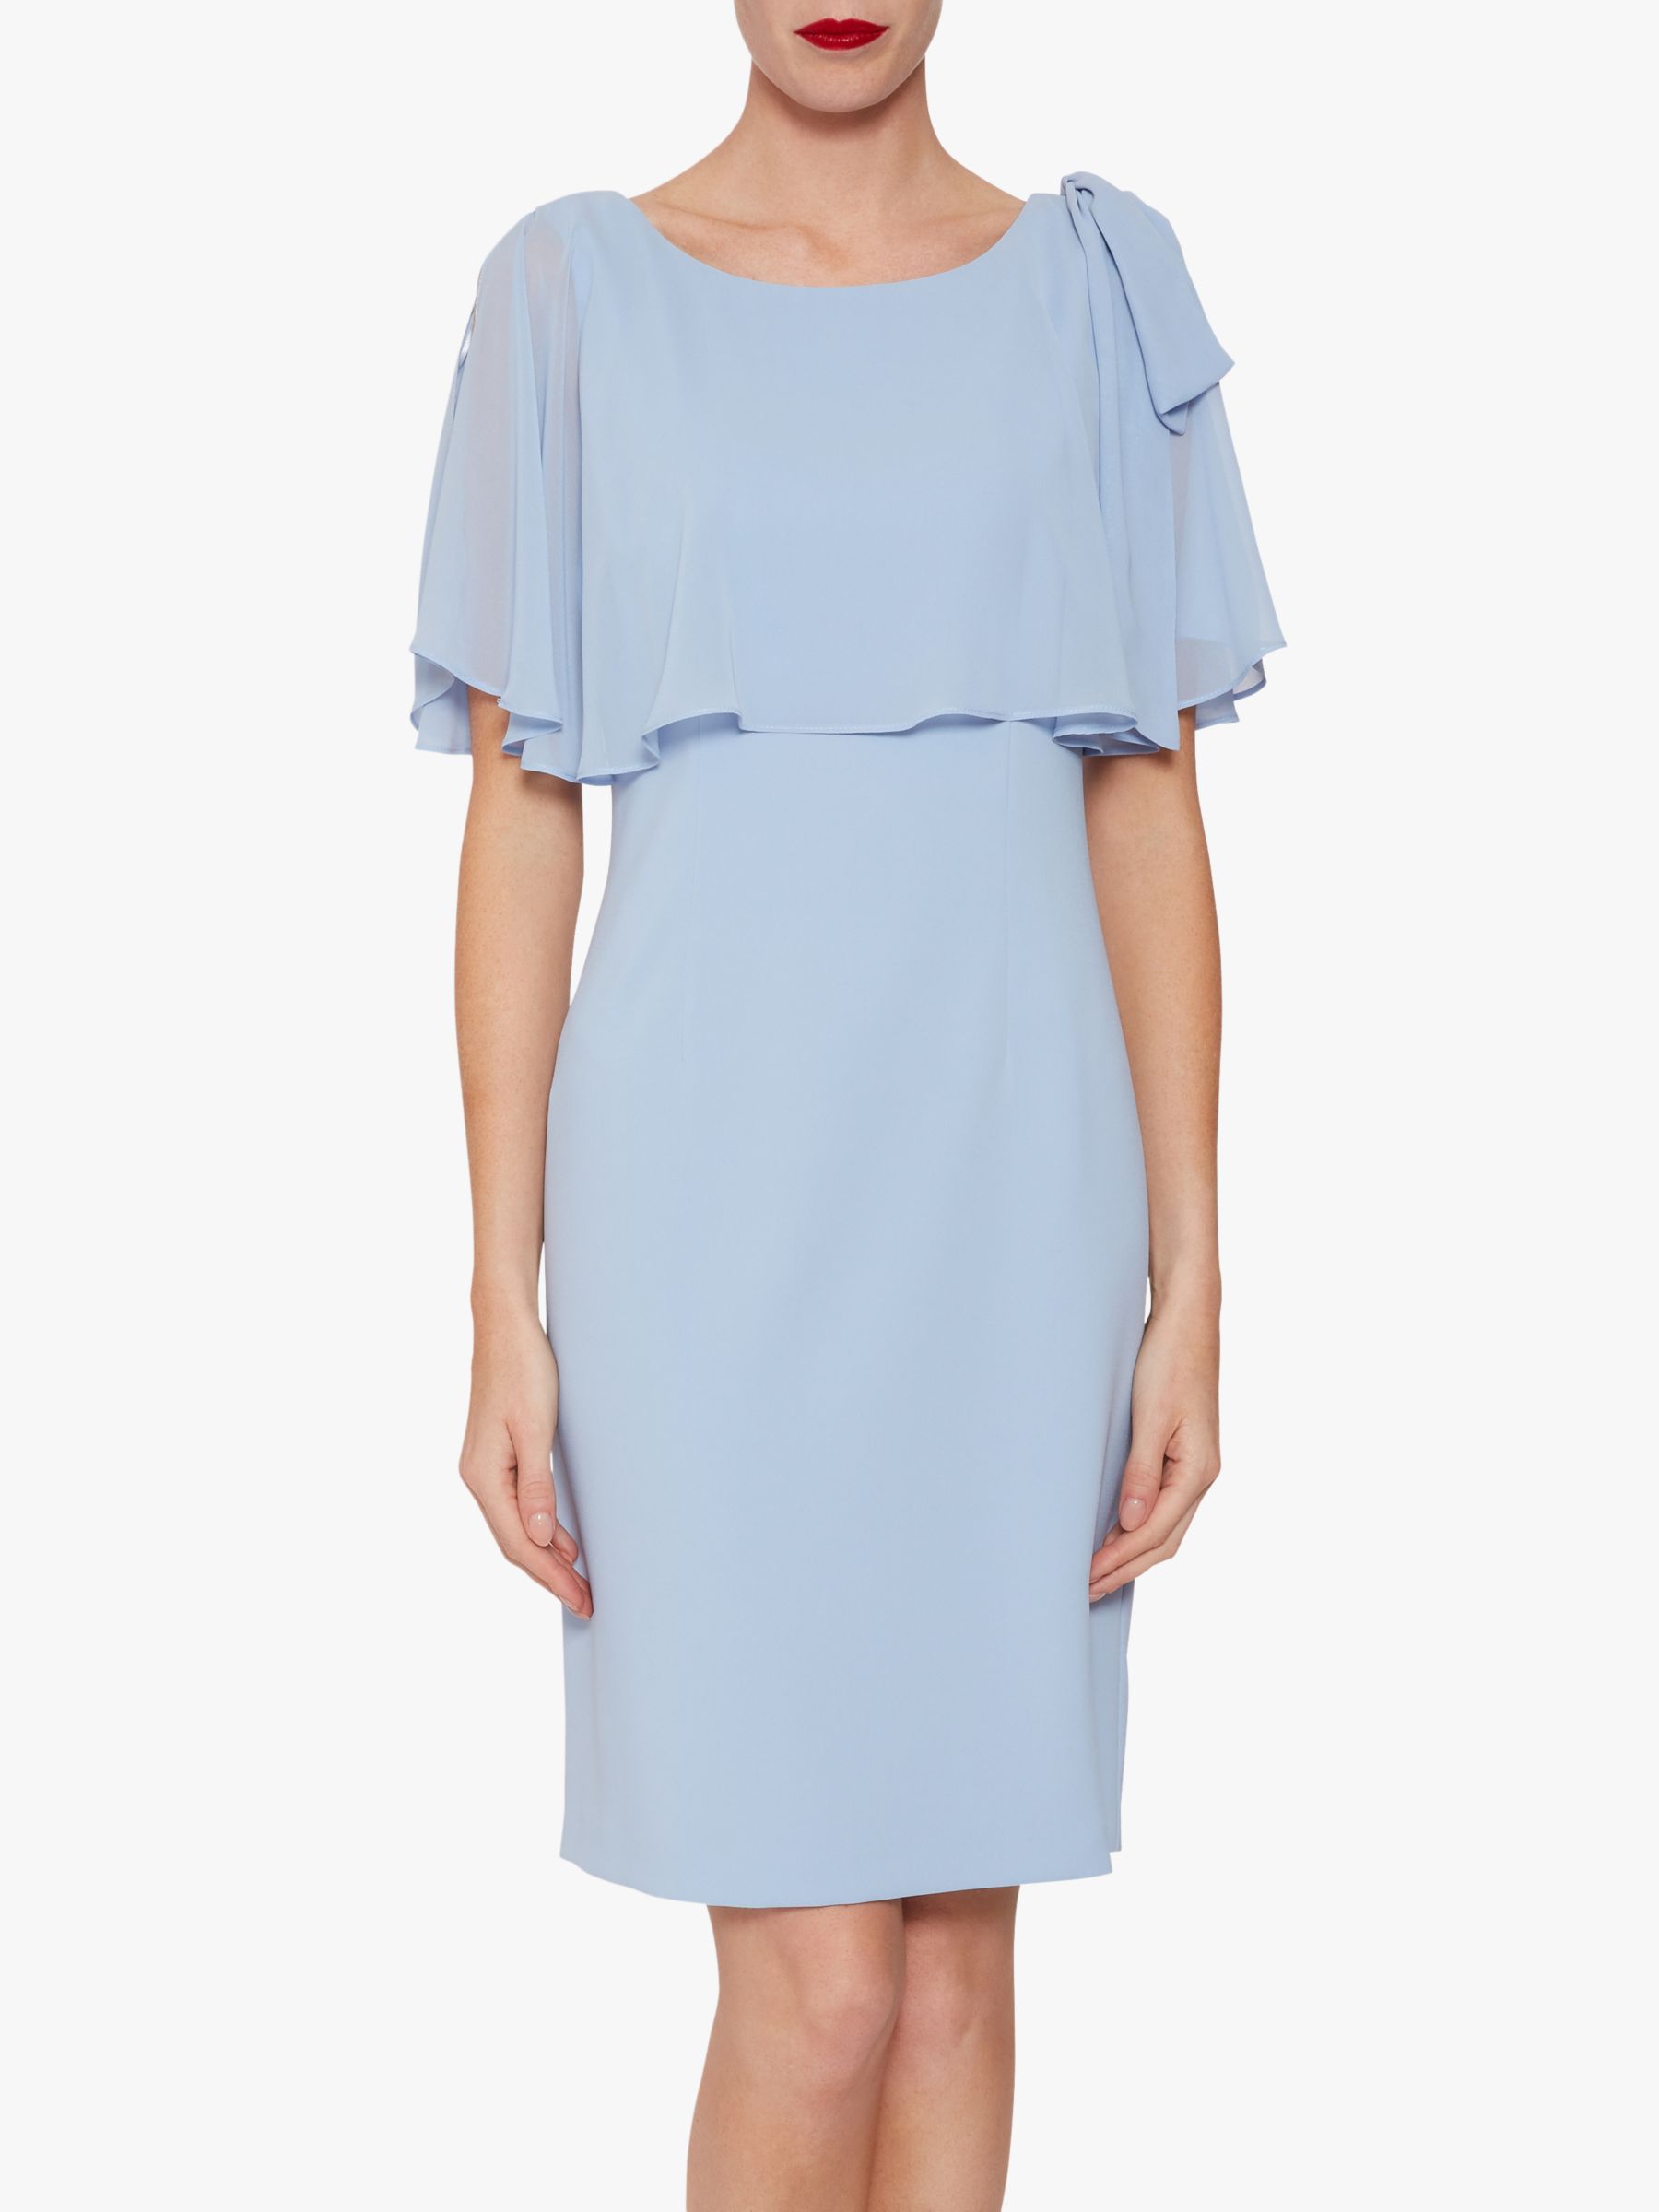 Gina Bacconi Krissy Crepe Dress, Nordic Blue